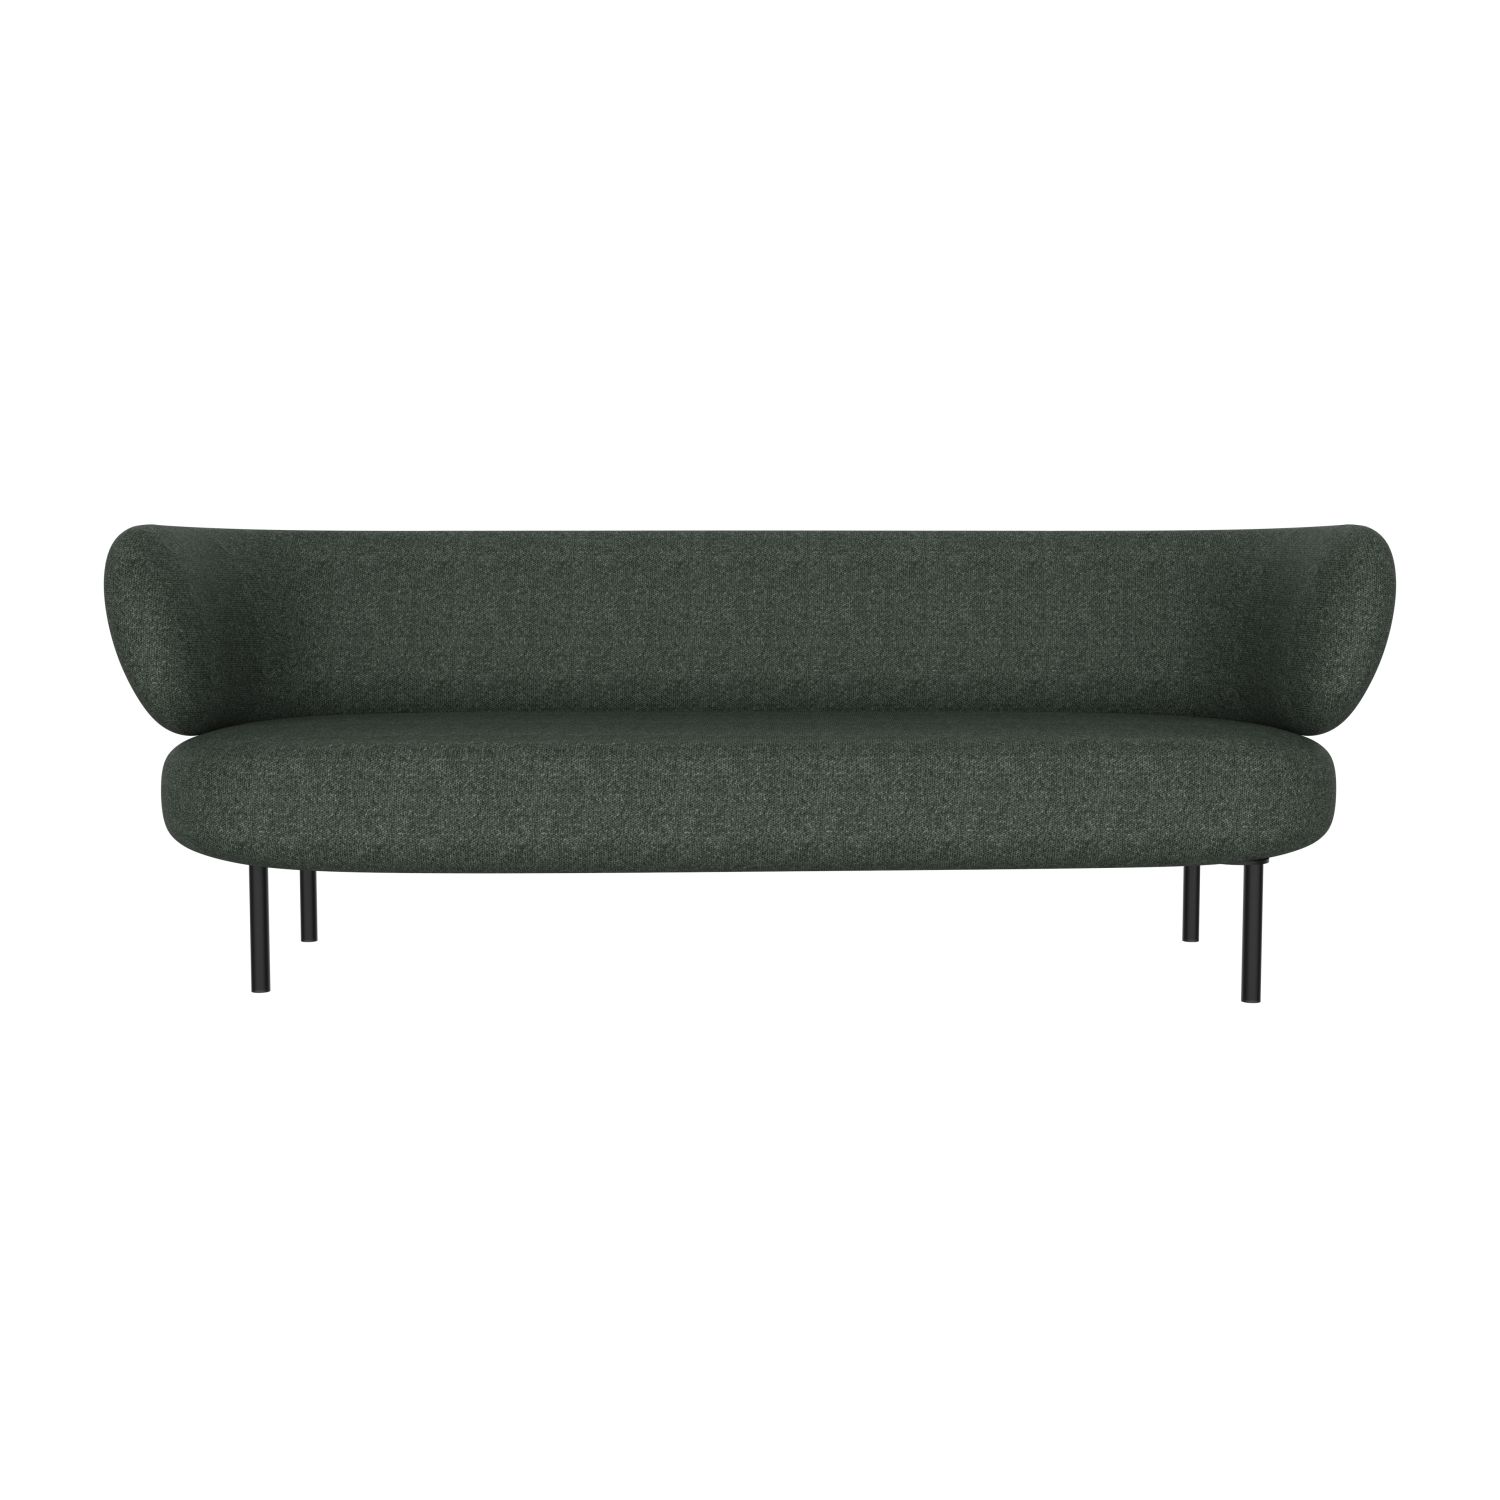 lensvelt studio stefan scholten sofa 3seater 215x84cm middle lounge part moss summer green 38 frame black ral9005